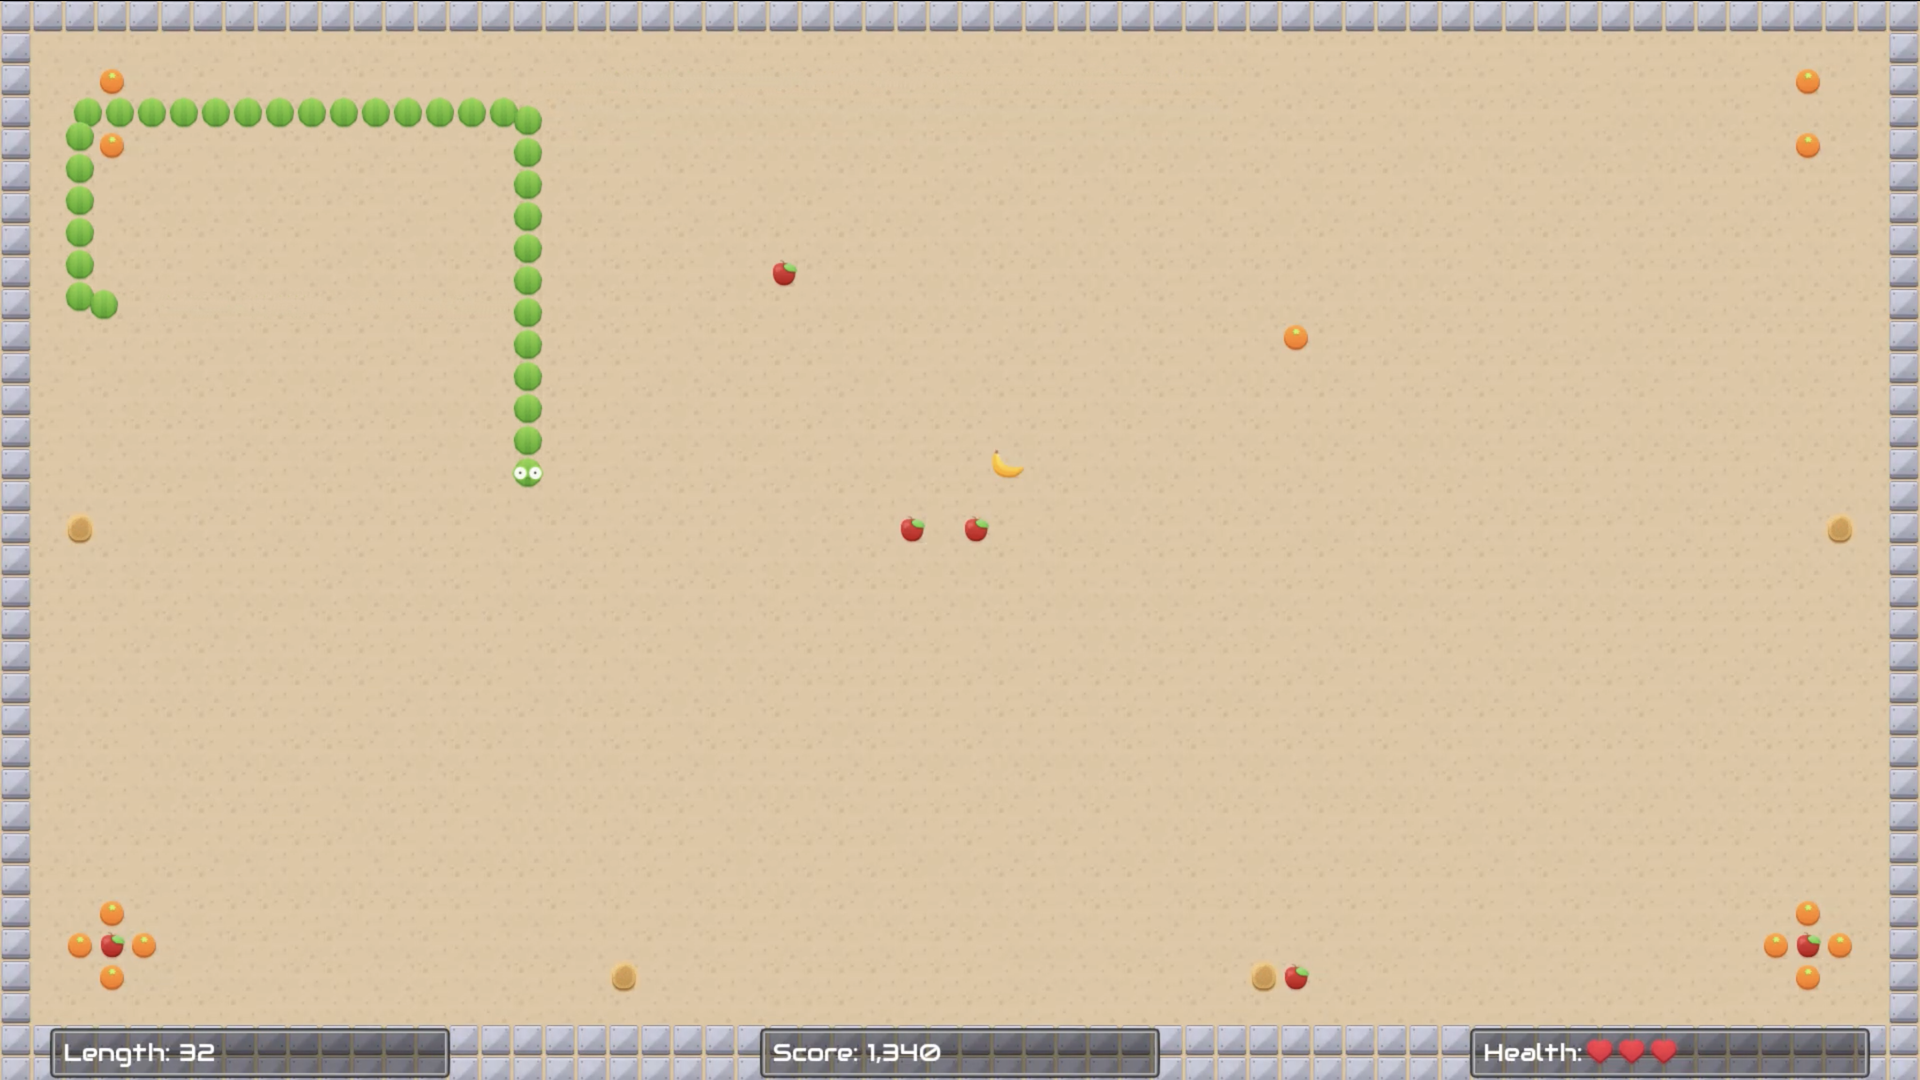 Video game screenshot showing a green snake that gets longer as it eats fruit